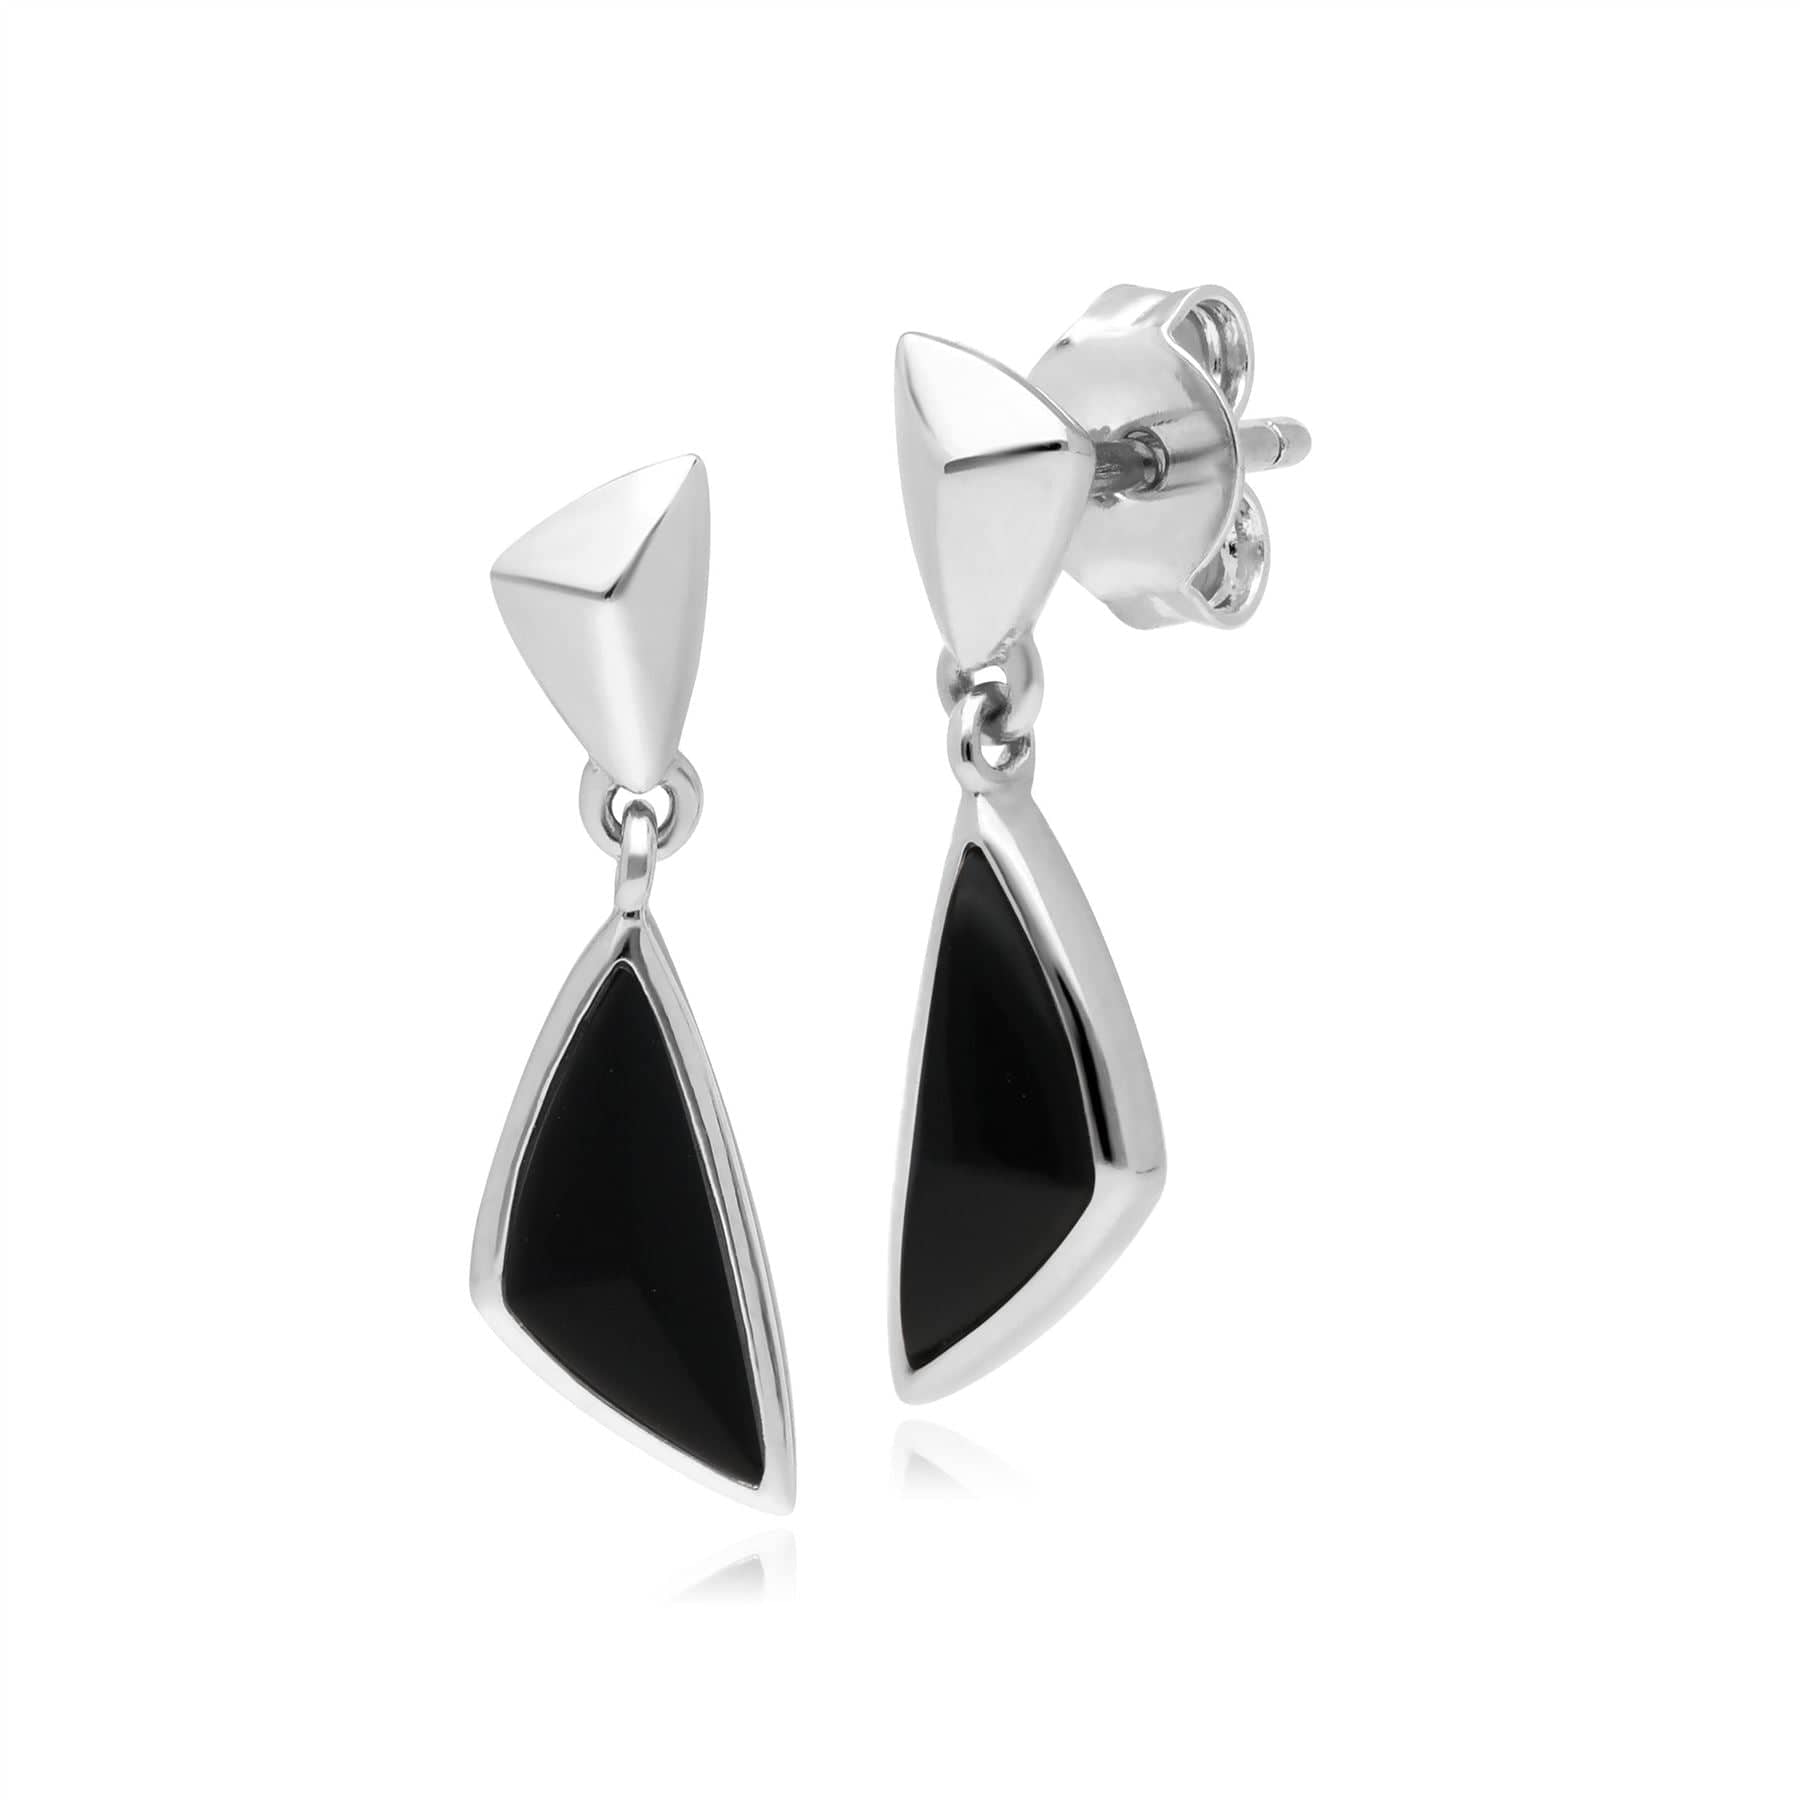 Micro Statement Black Onyx Drop Earrings in 925 Sterling Silver